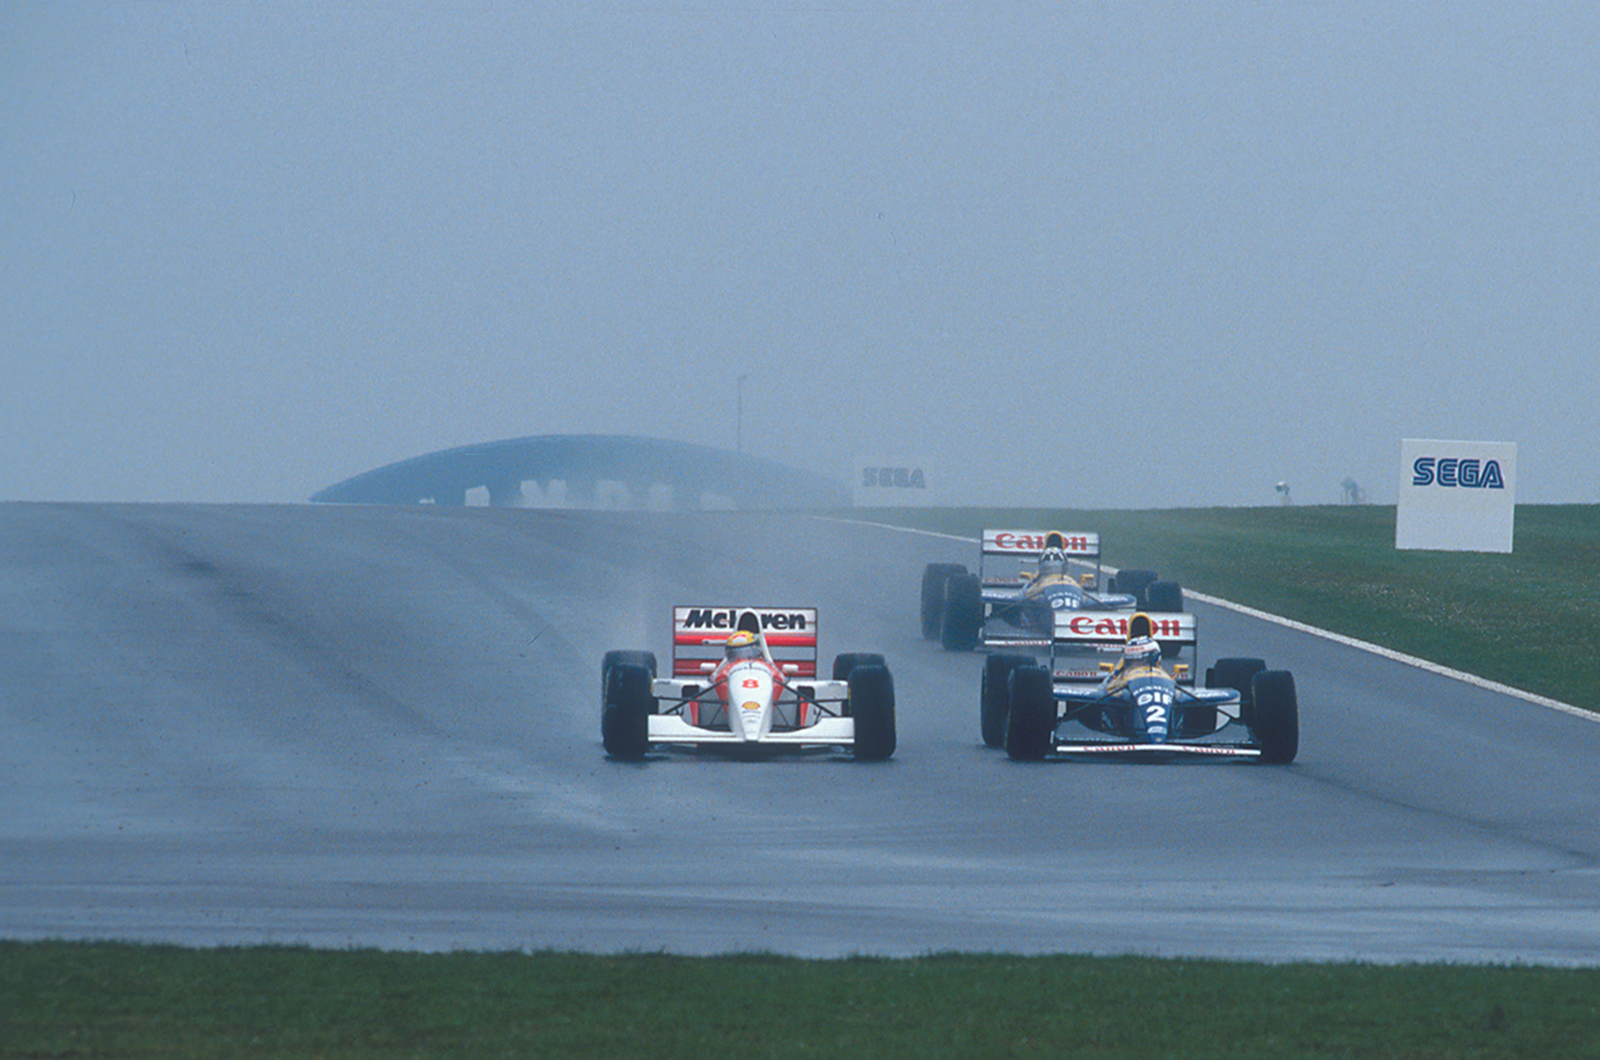 1993 European Grand Prix at Donington